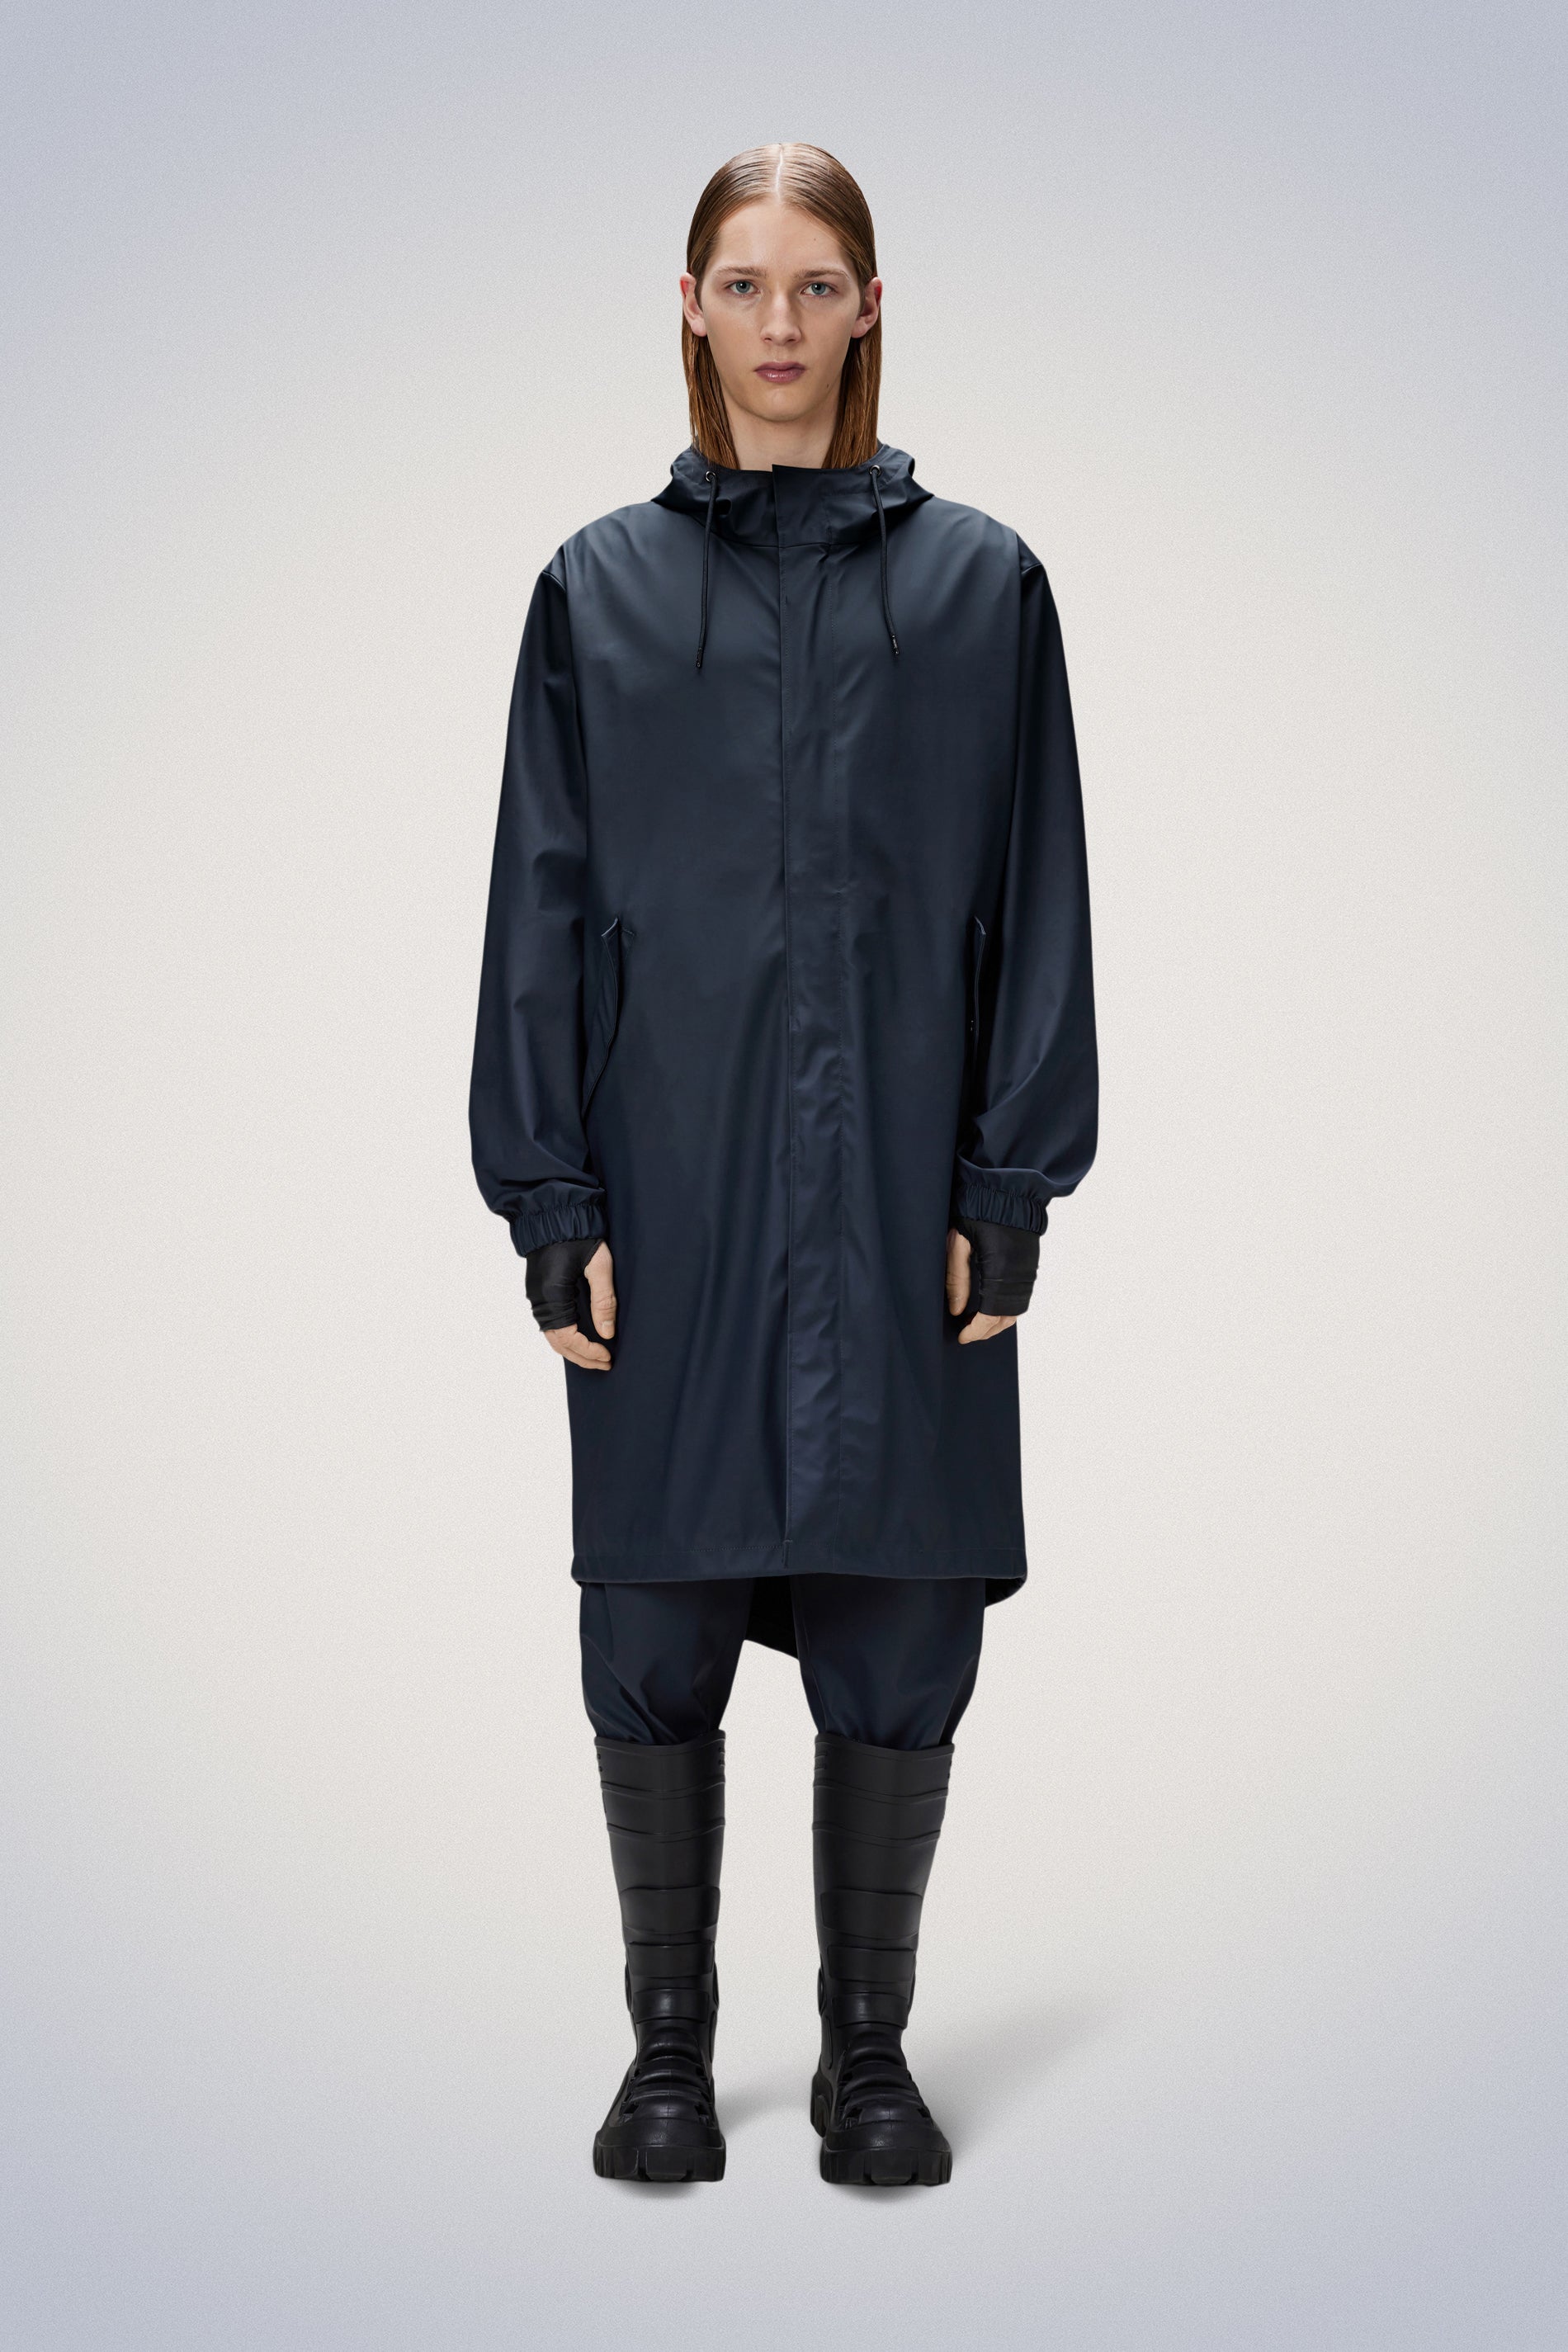 Rain Gear for Men | Buy Rainwear & Outfits for Men from Rains®